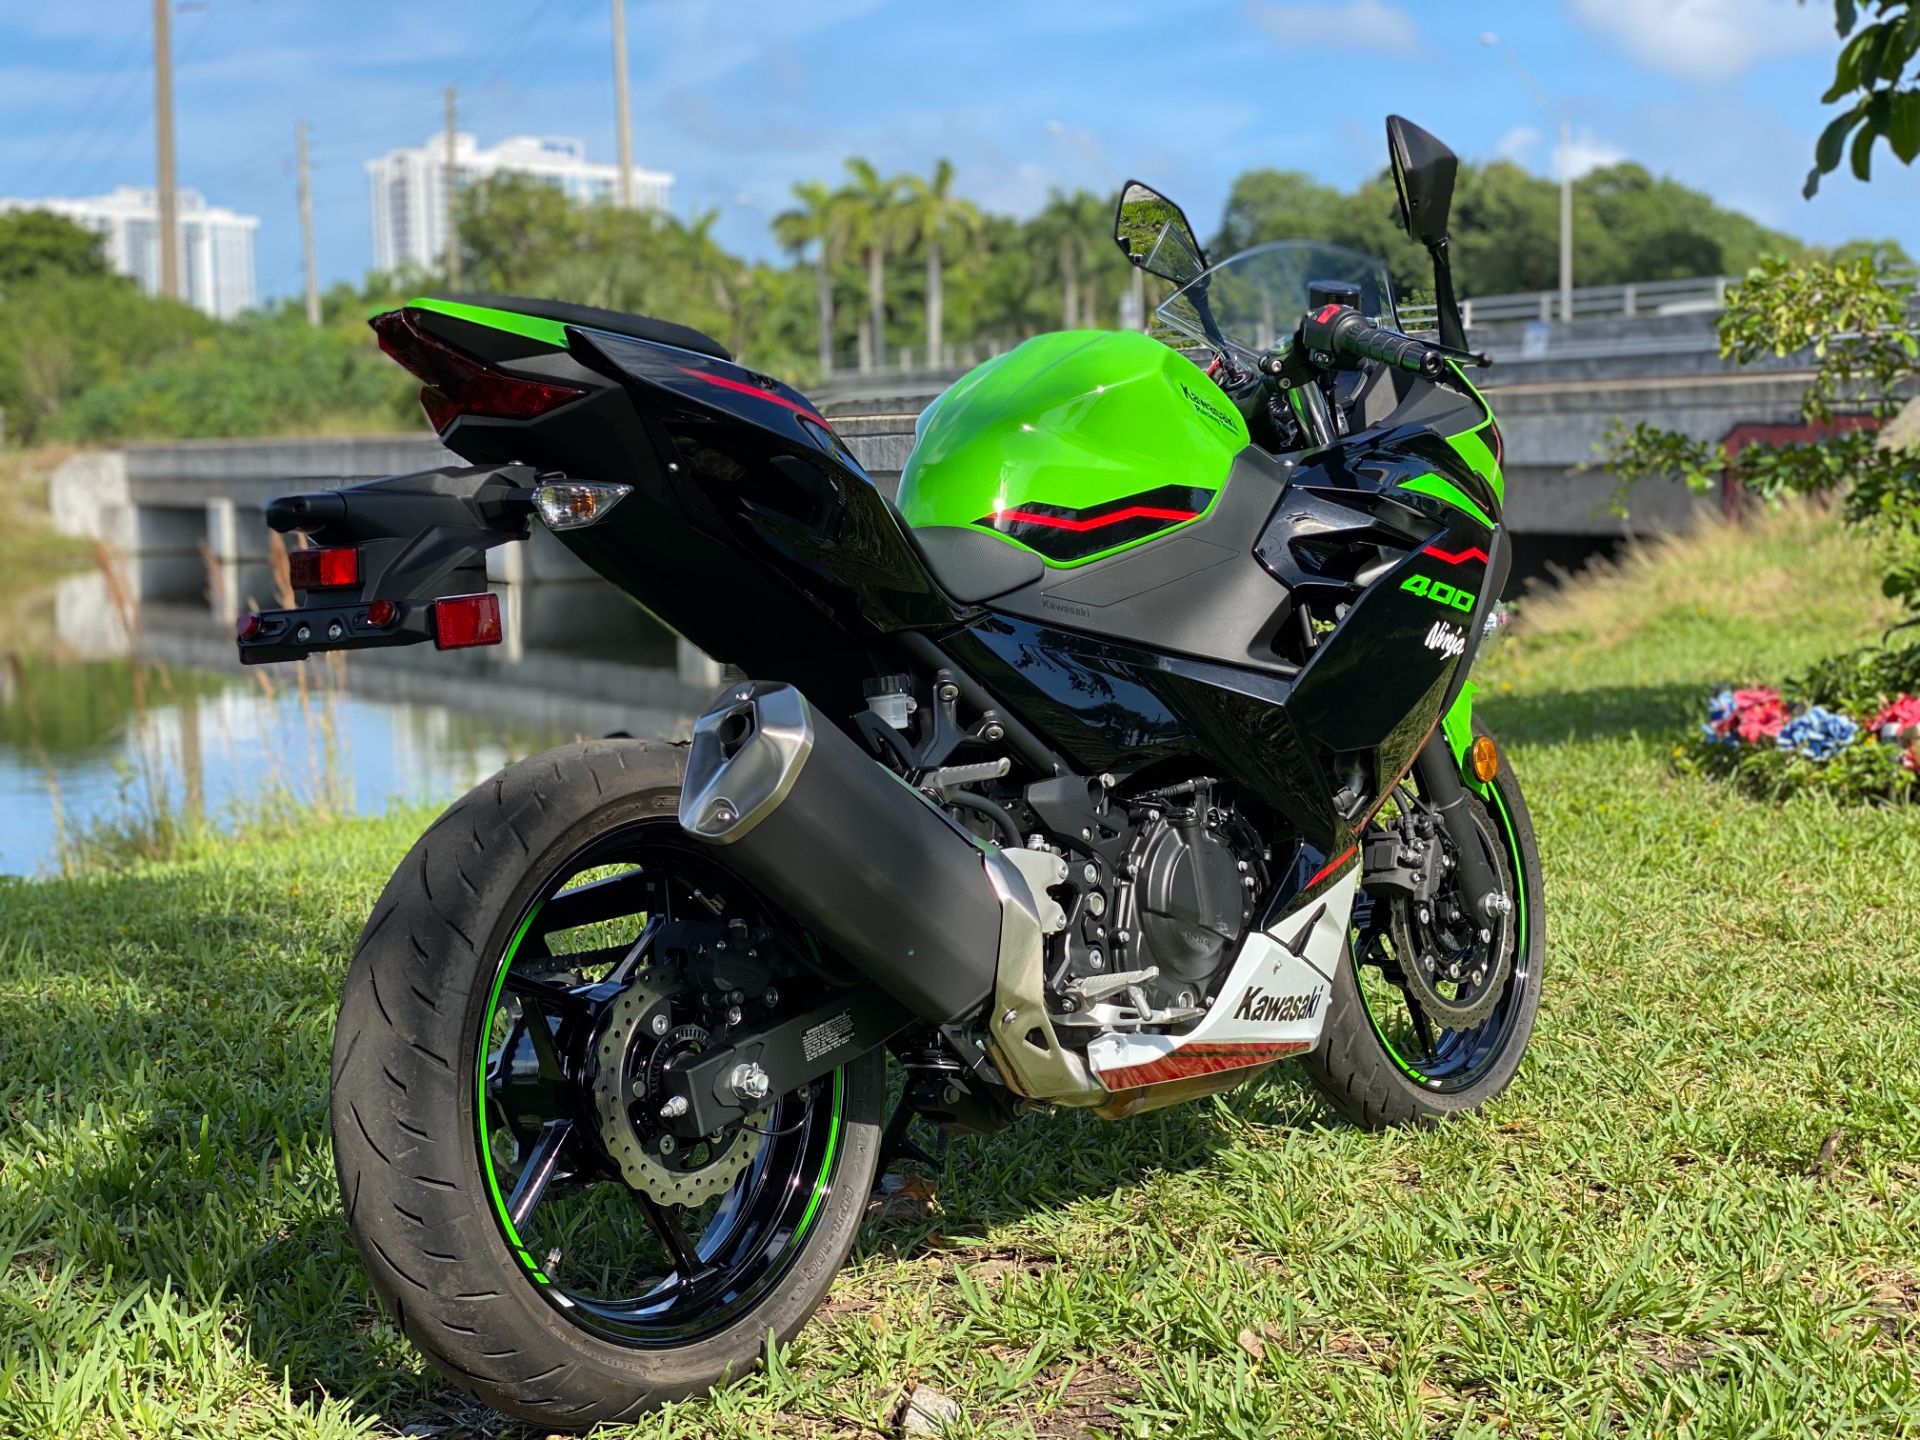 2022 Kawasaki Ninja 400 ABS KRT Edition in North Miami Beach, Florida - Photo 4